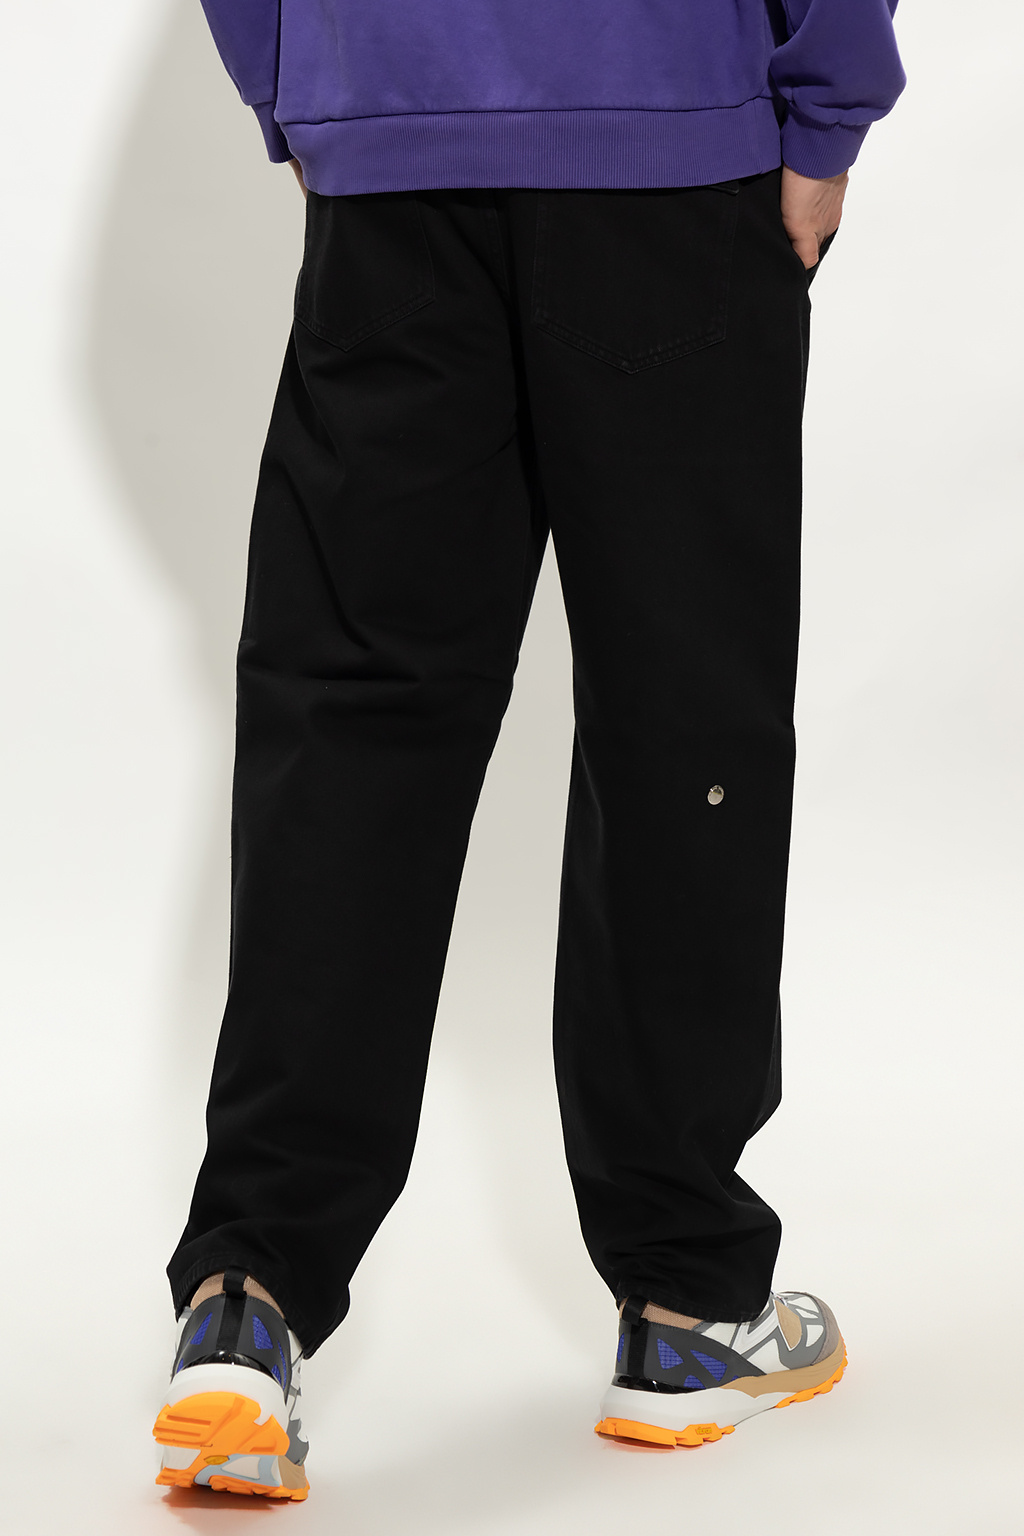 Philippe Model ‘Charles’ svart trousers